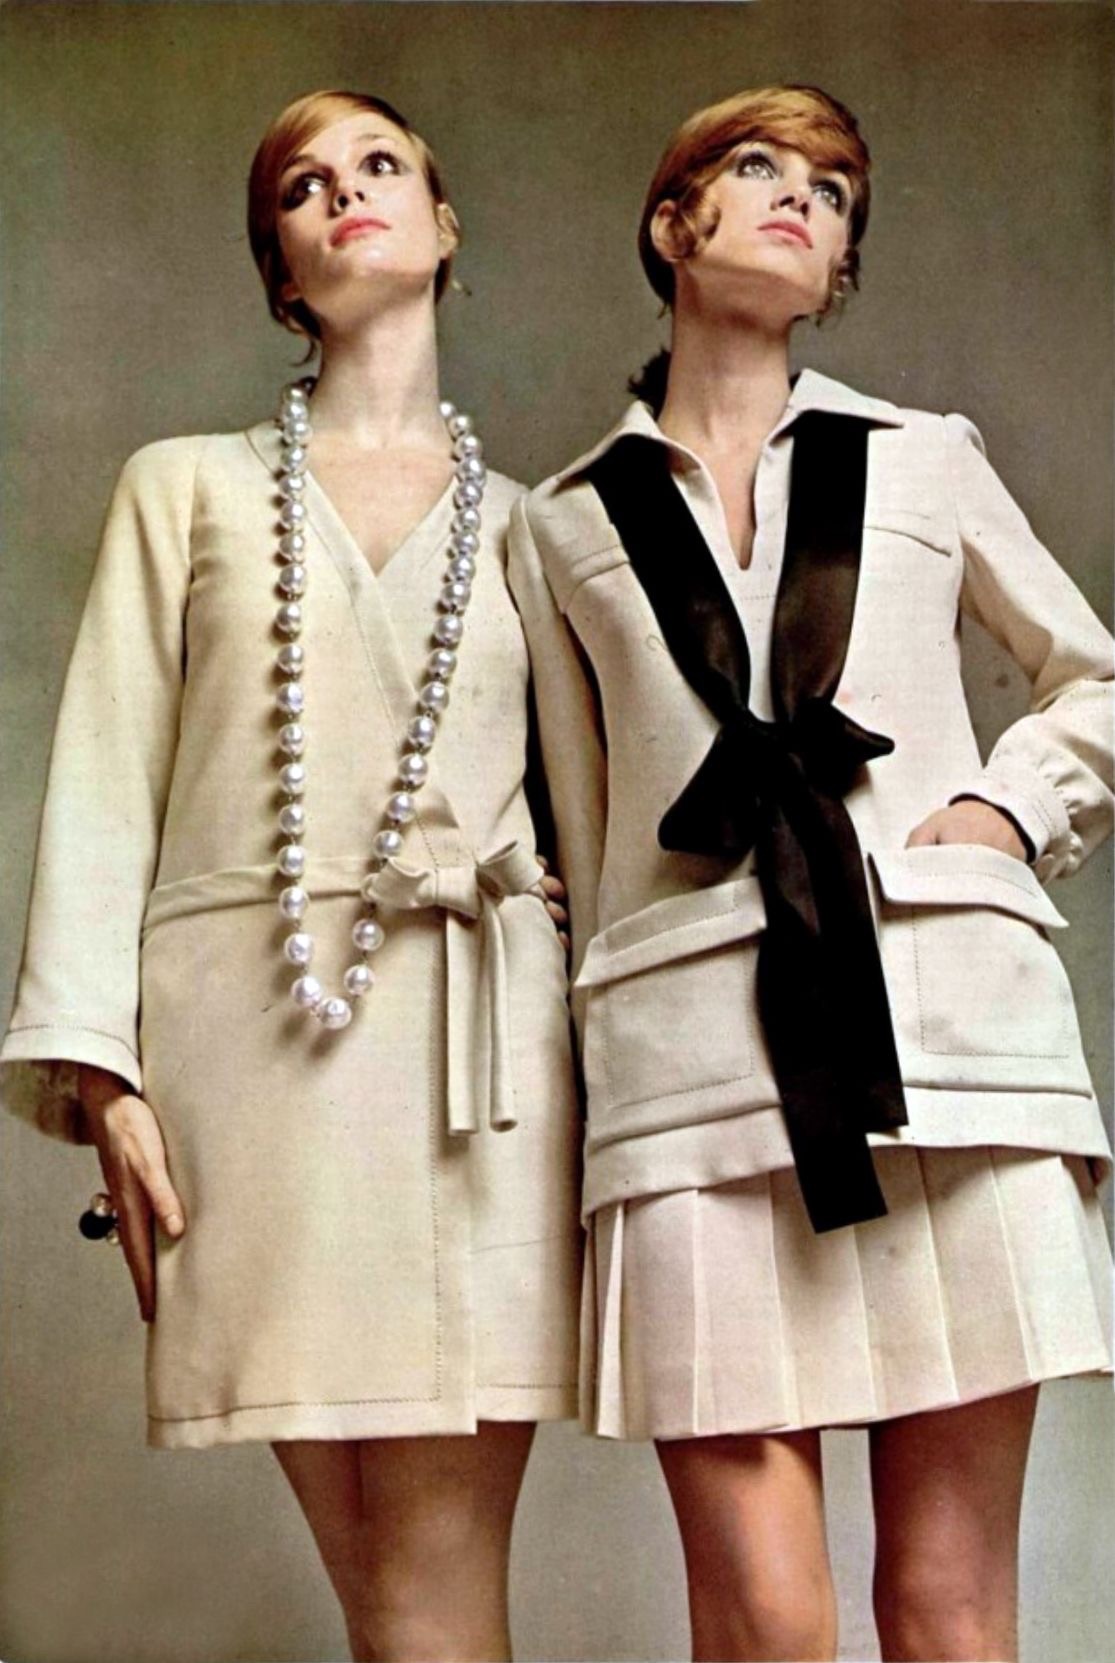 sixtiescircus: Sixties Fashion